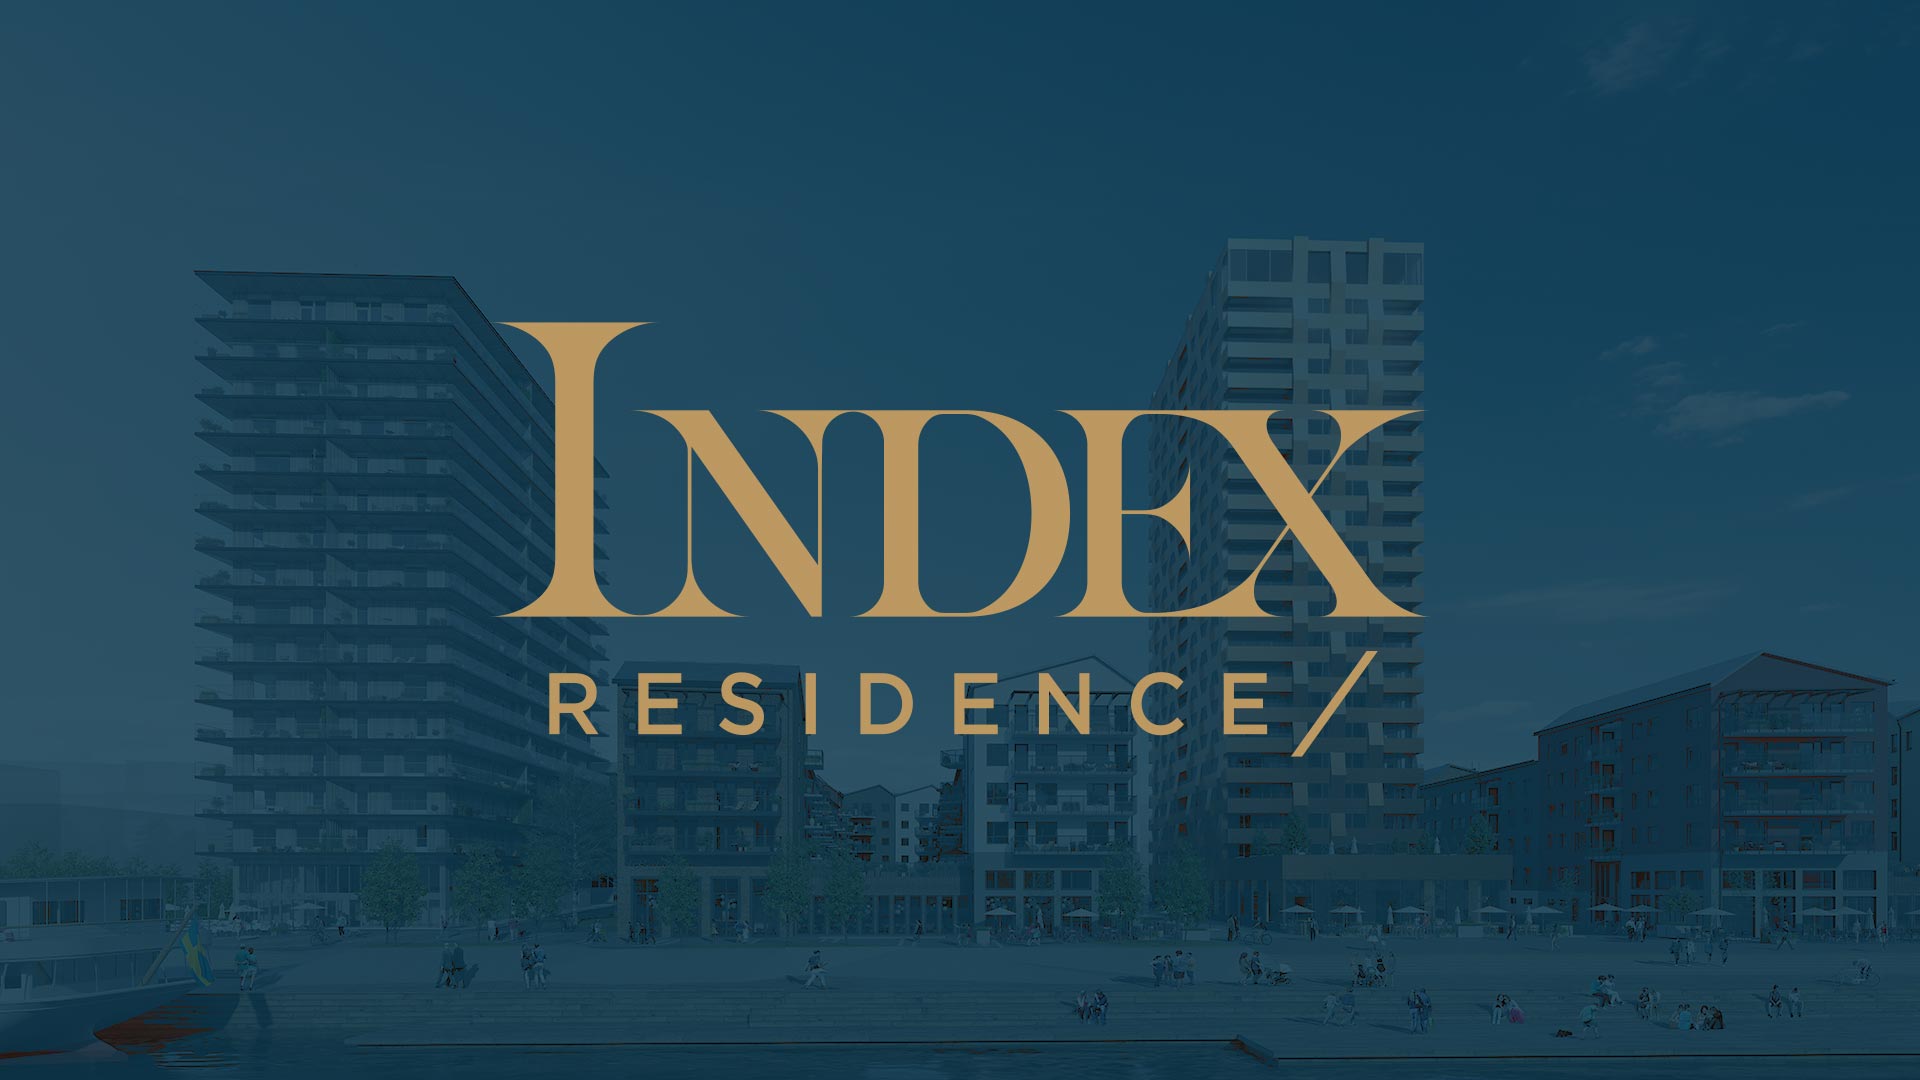 İstinye Park Residence - Residence Index